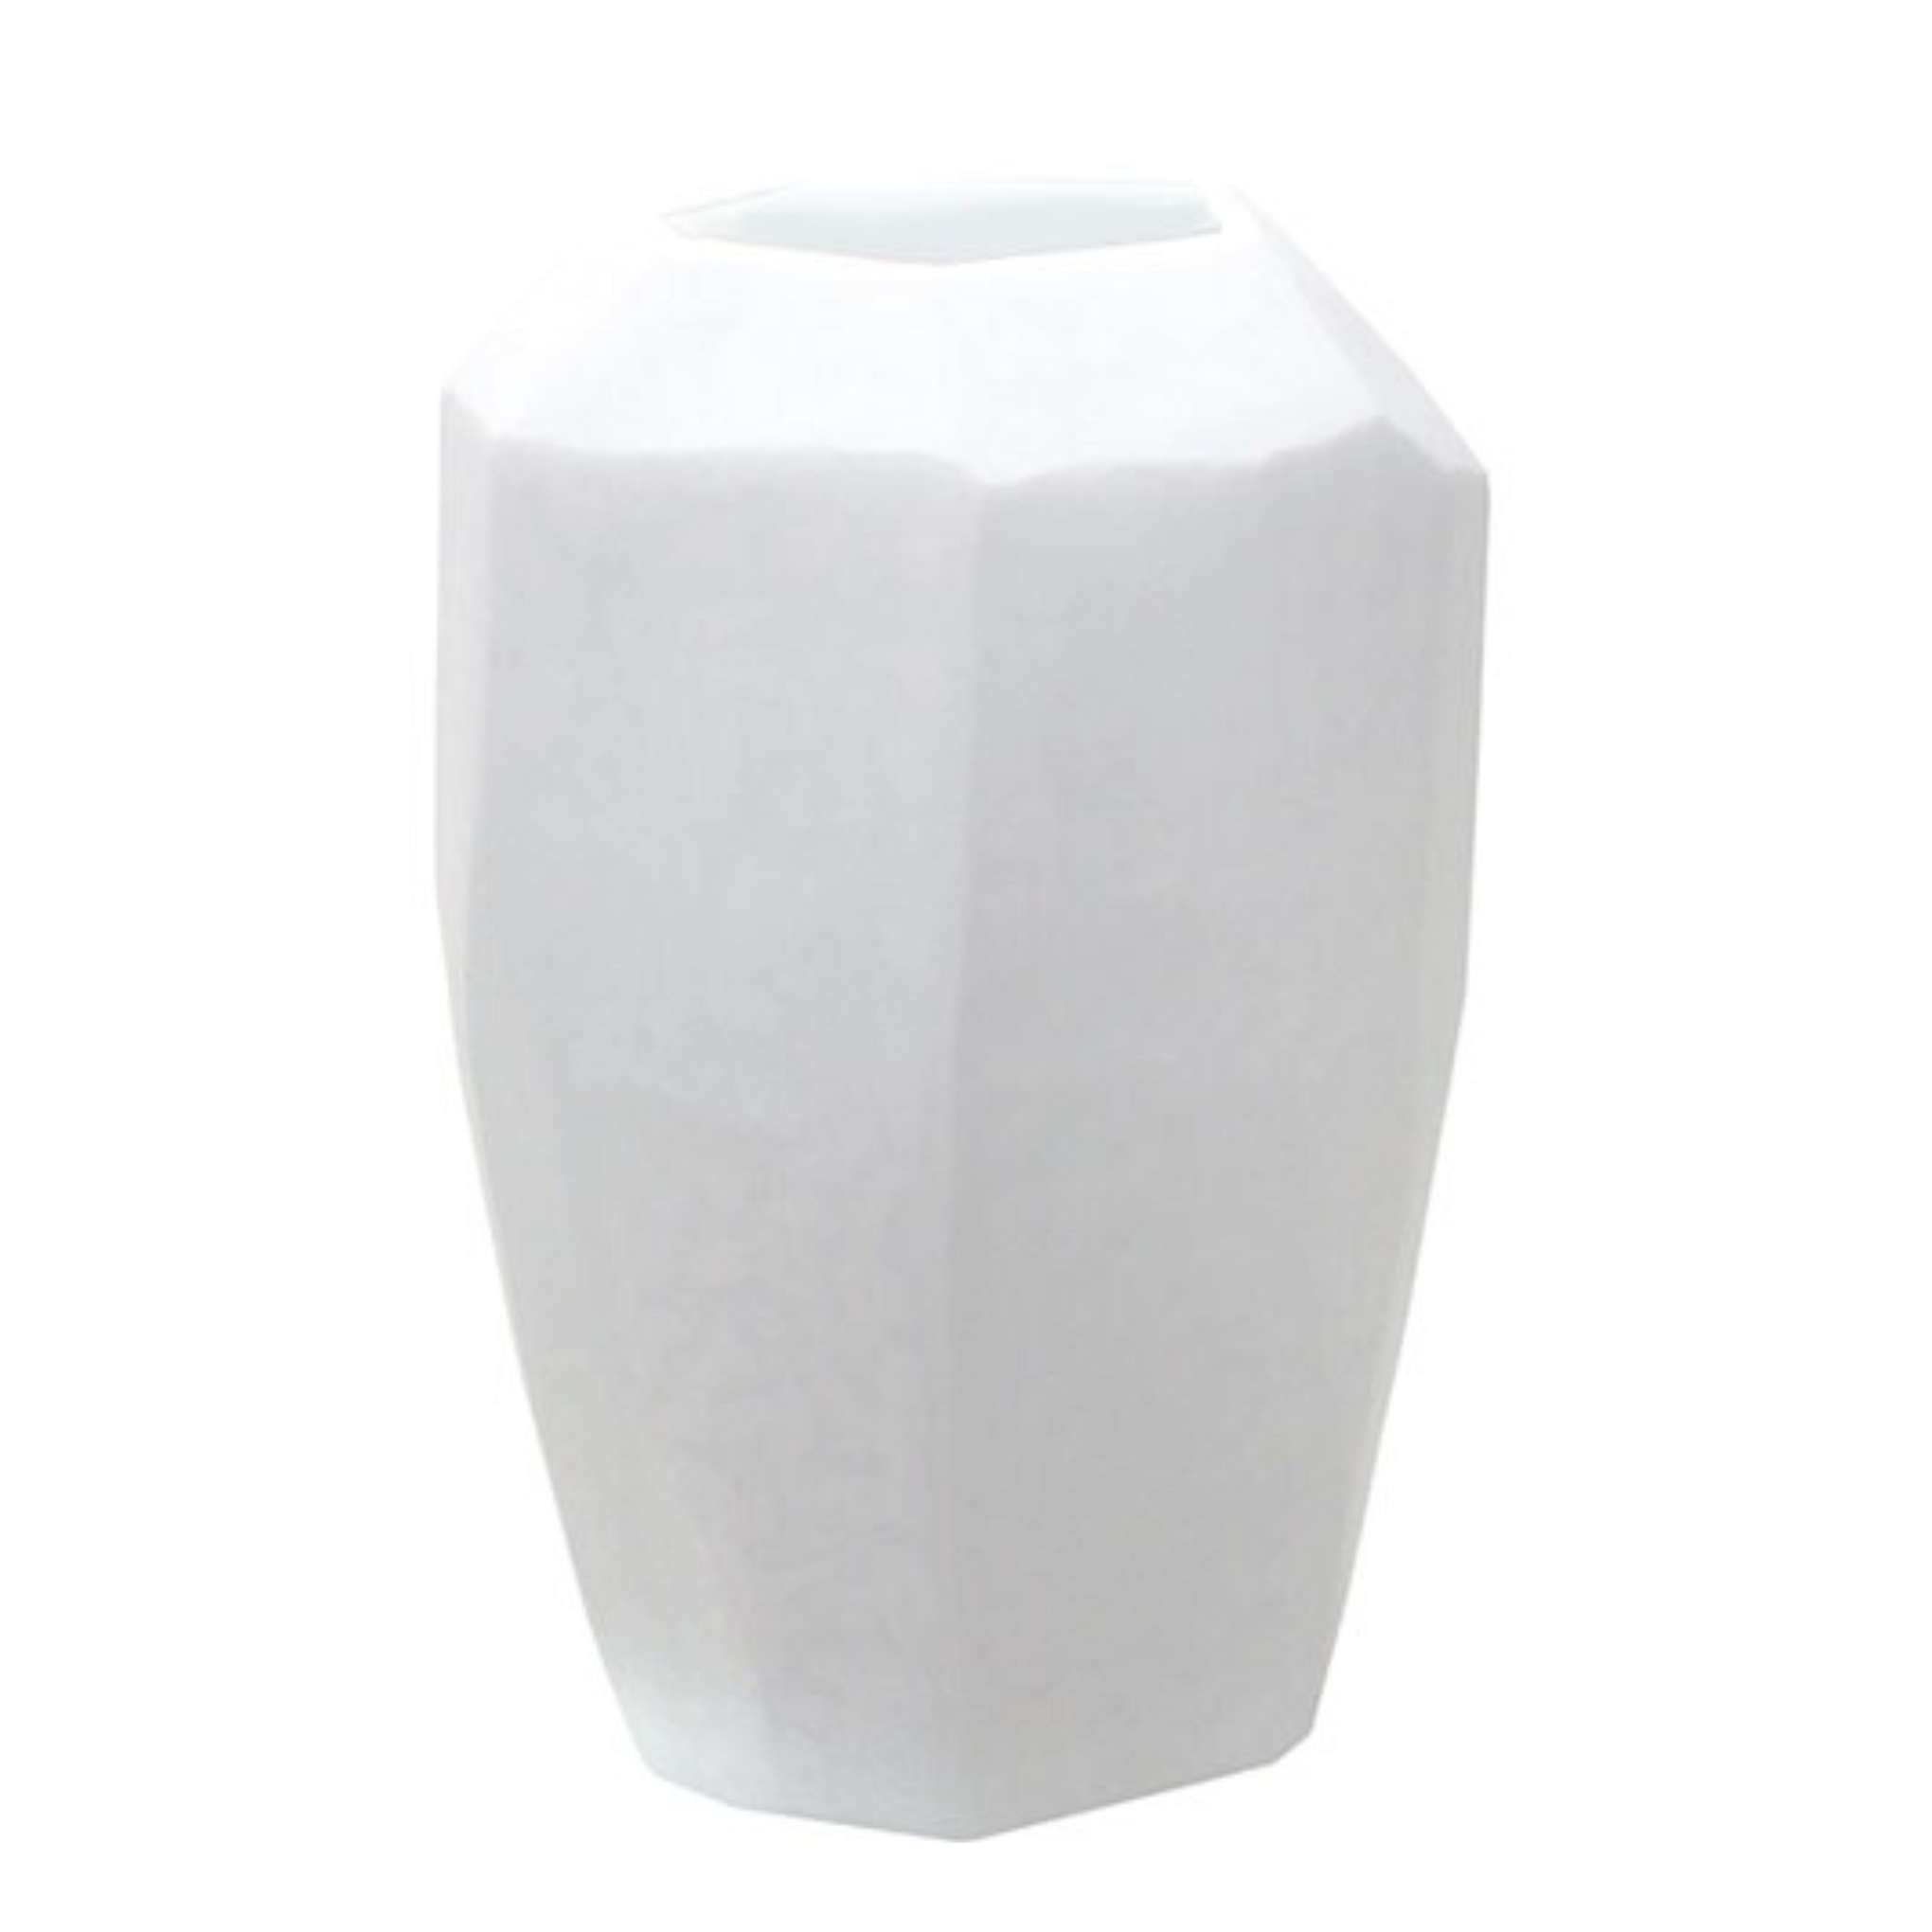 Guaxs Cubistic Tall Vase White